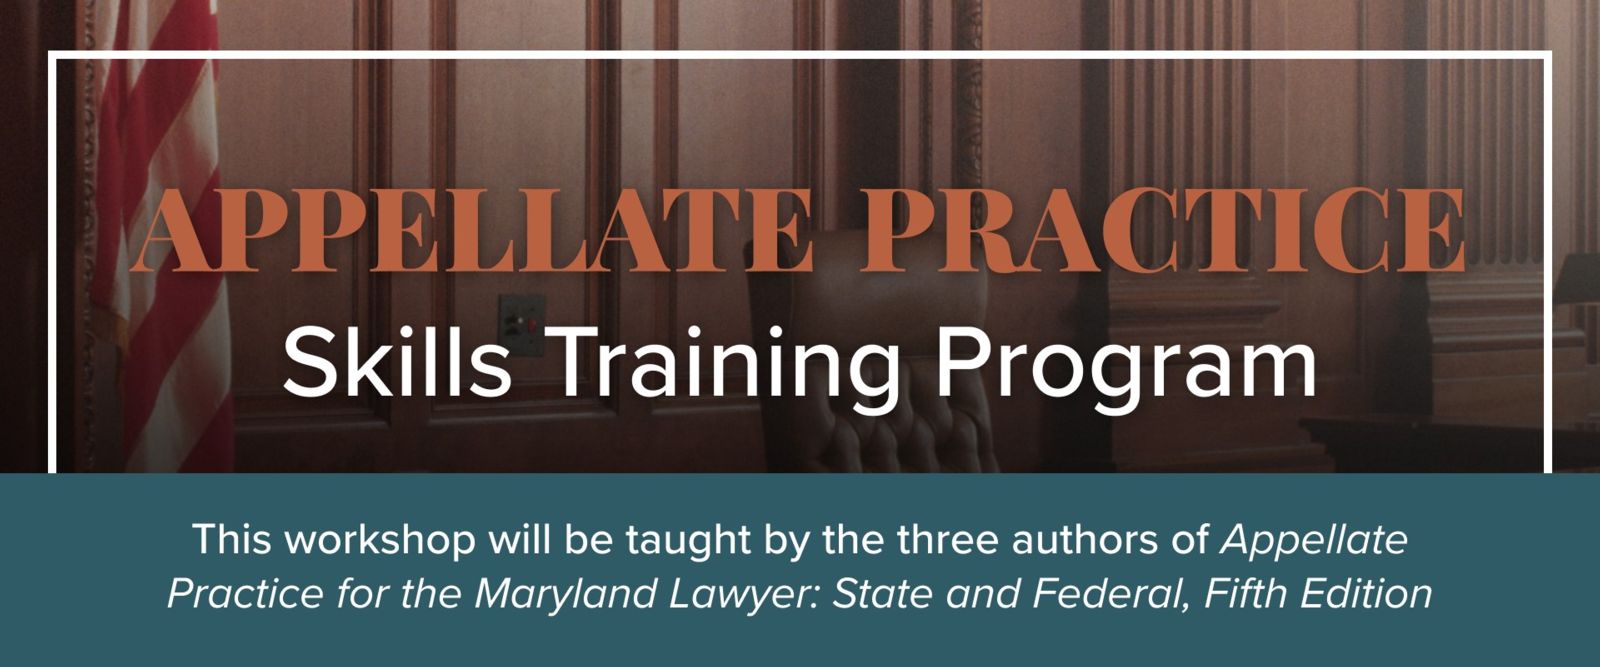 Appellate Practice Skills Training Program